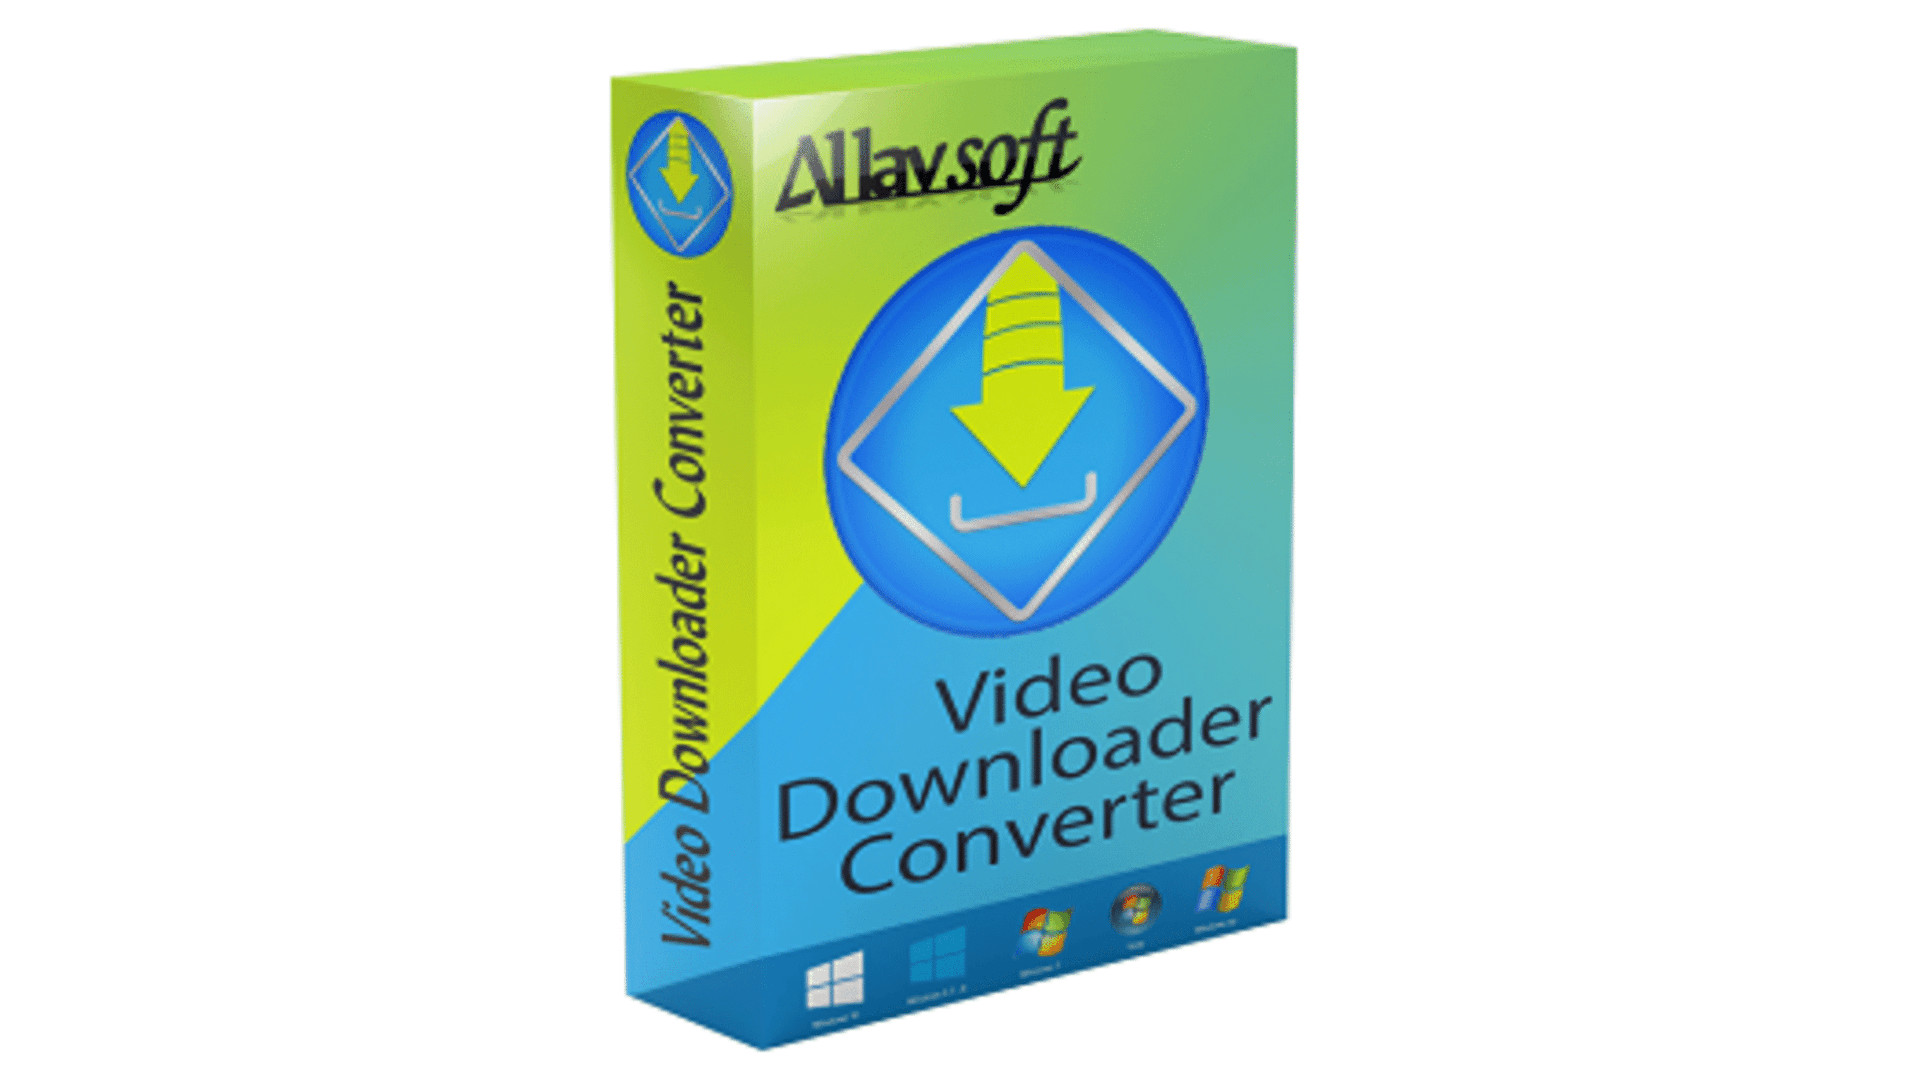 Allavsoft Video Downloader and Converter for Windows CD Key [USD 2.75]